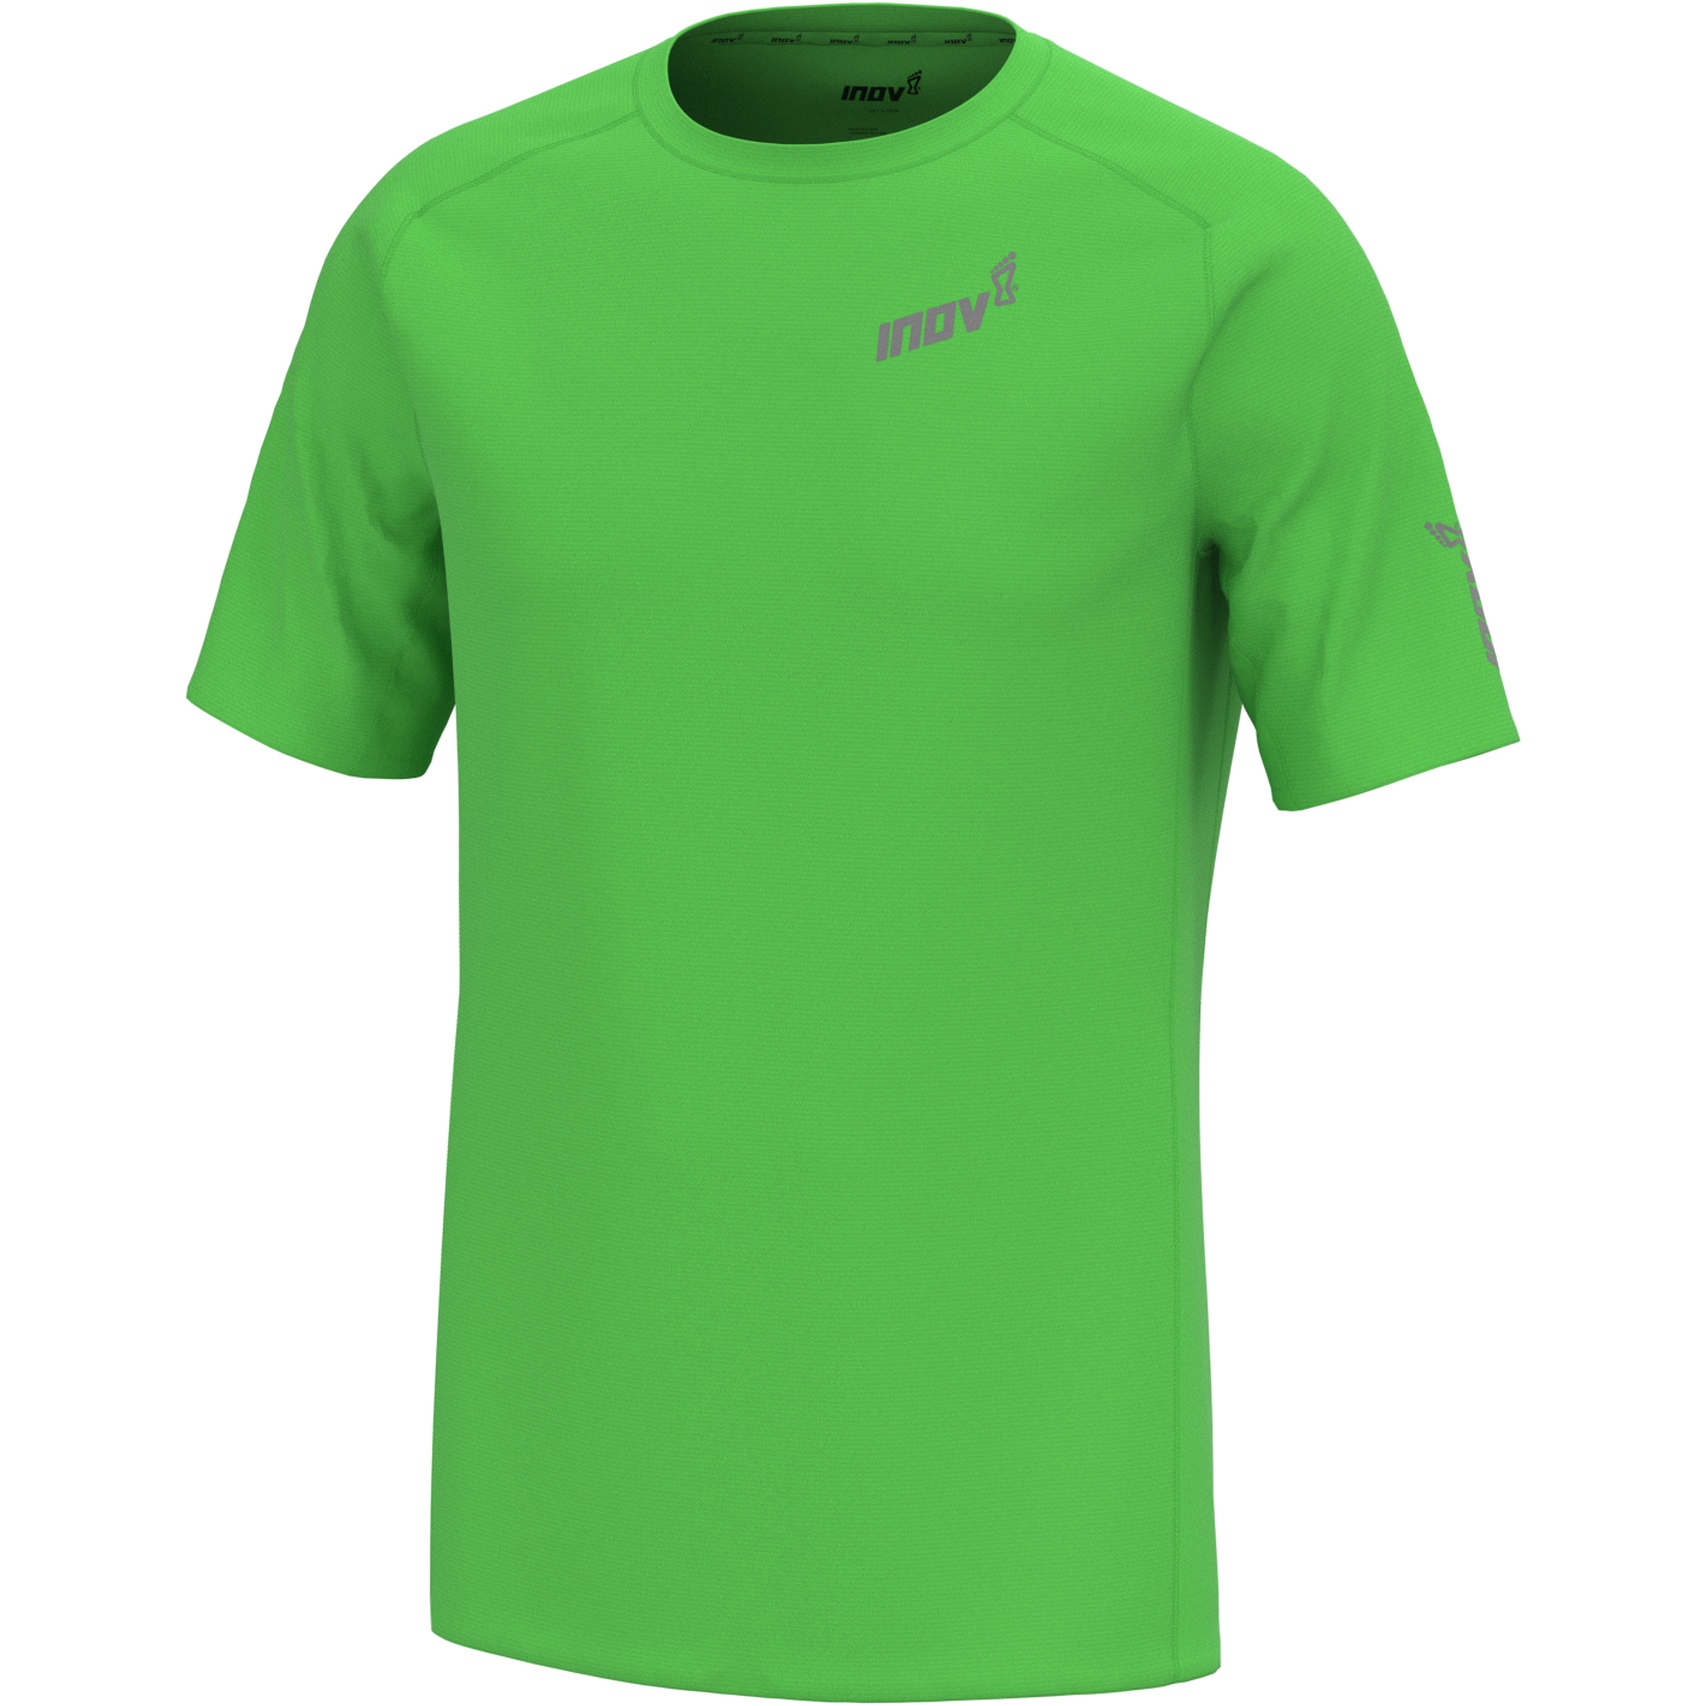 Picture of Inov-8 Base Elite Short Sleeve Running Shirt - green